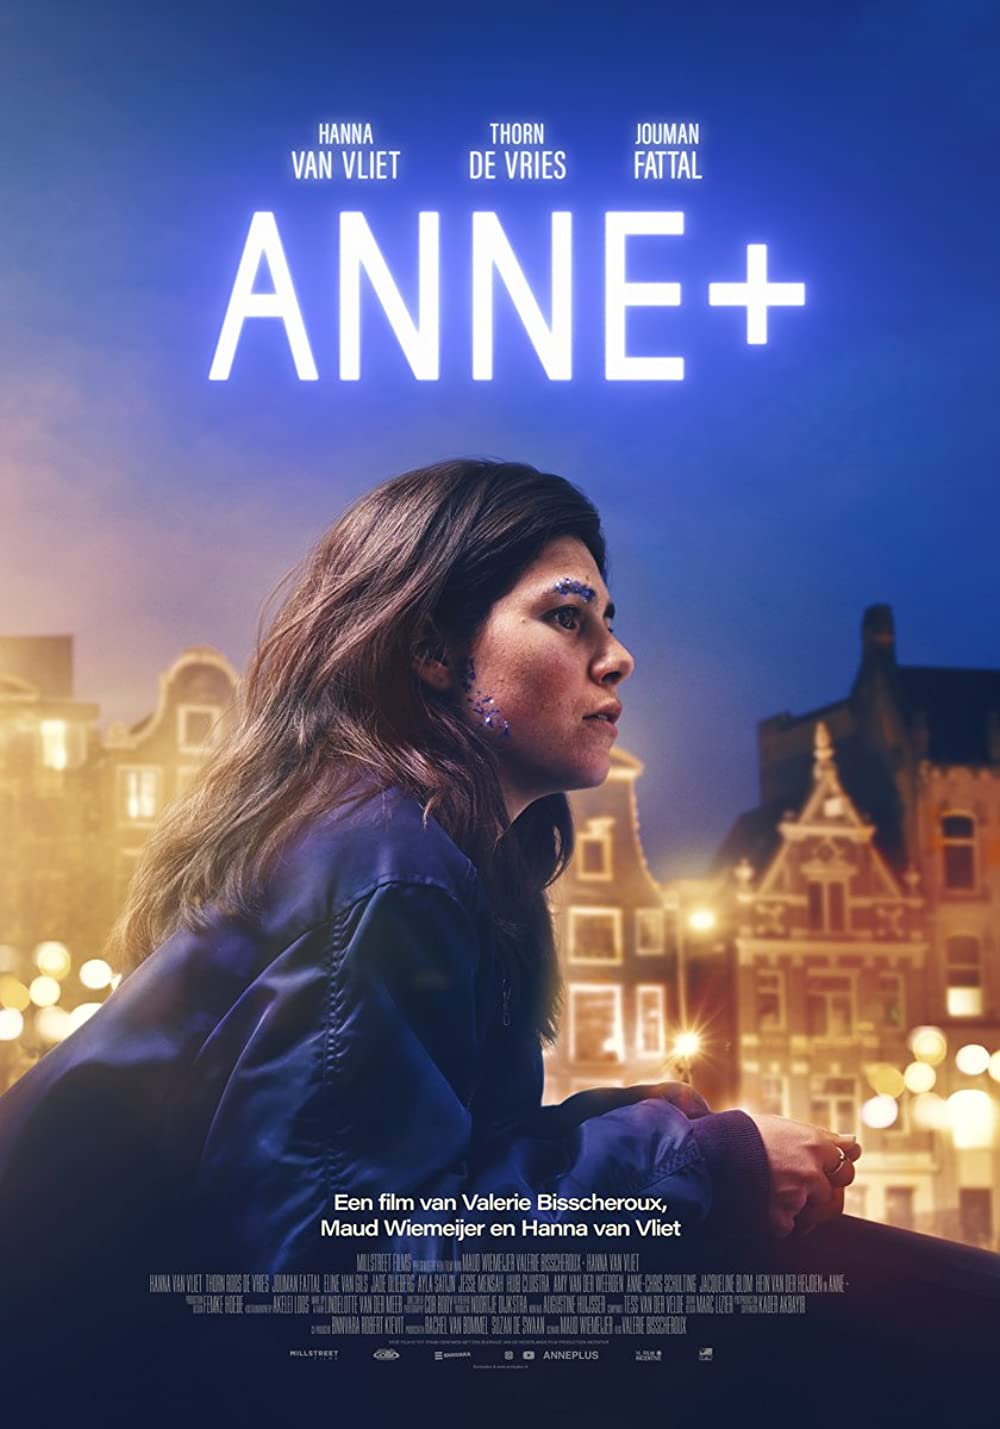 anne+ poster phim tình cảm